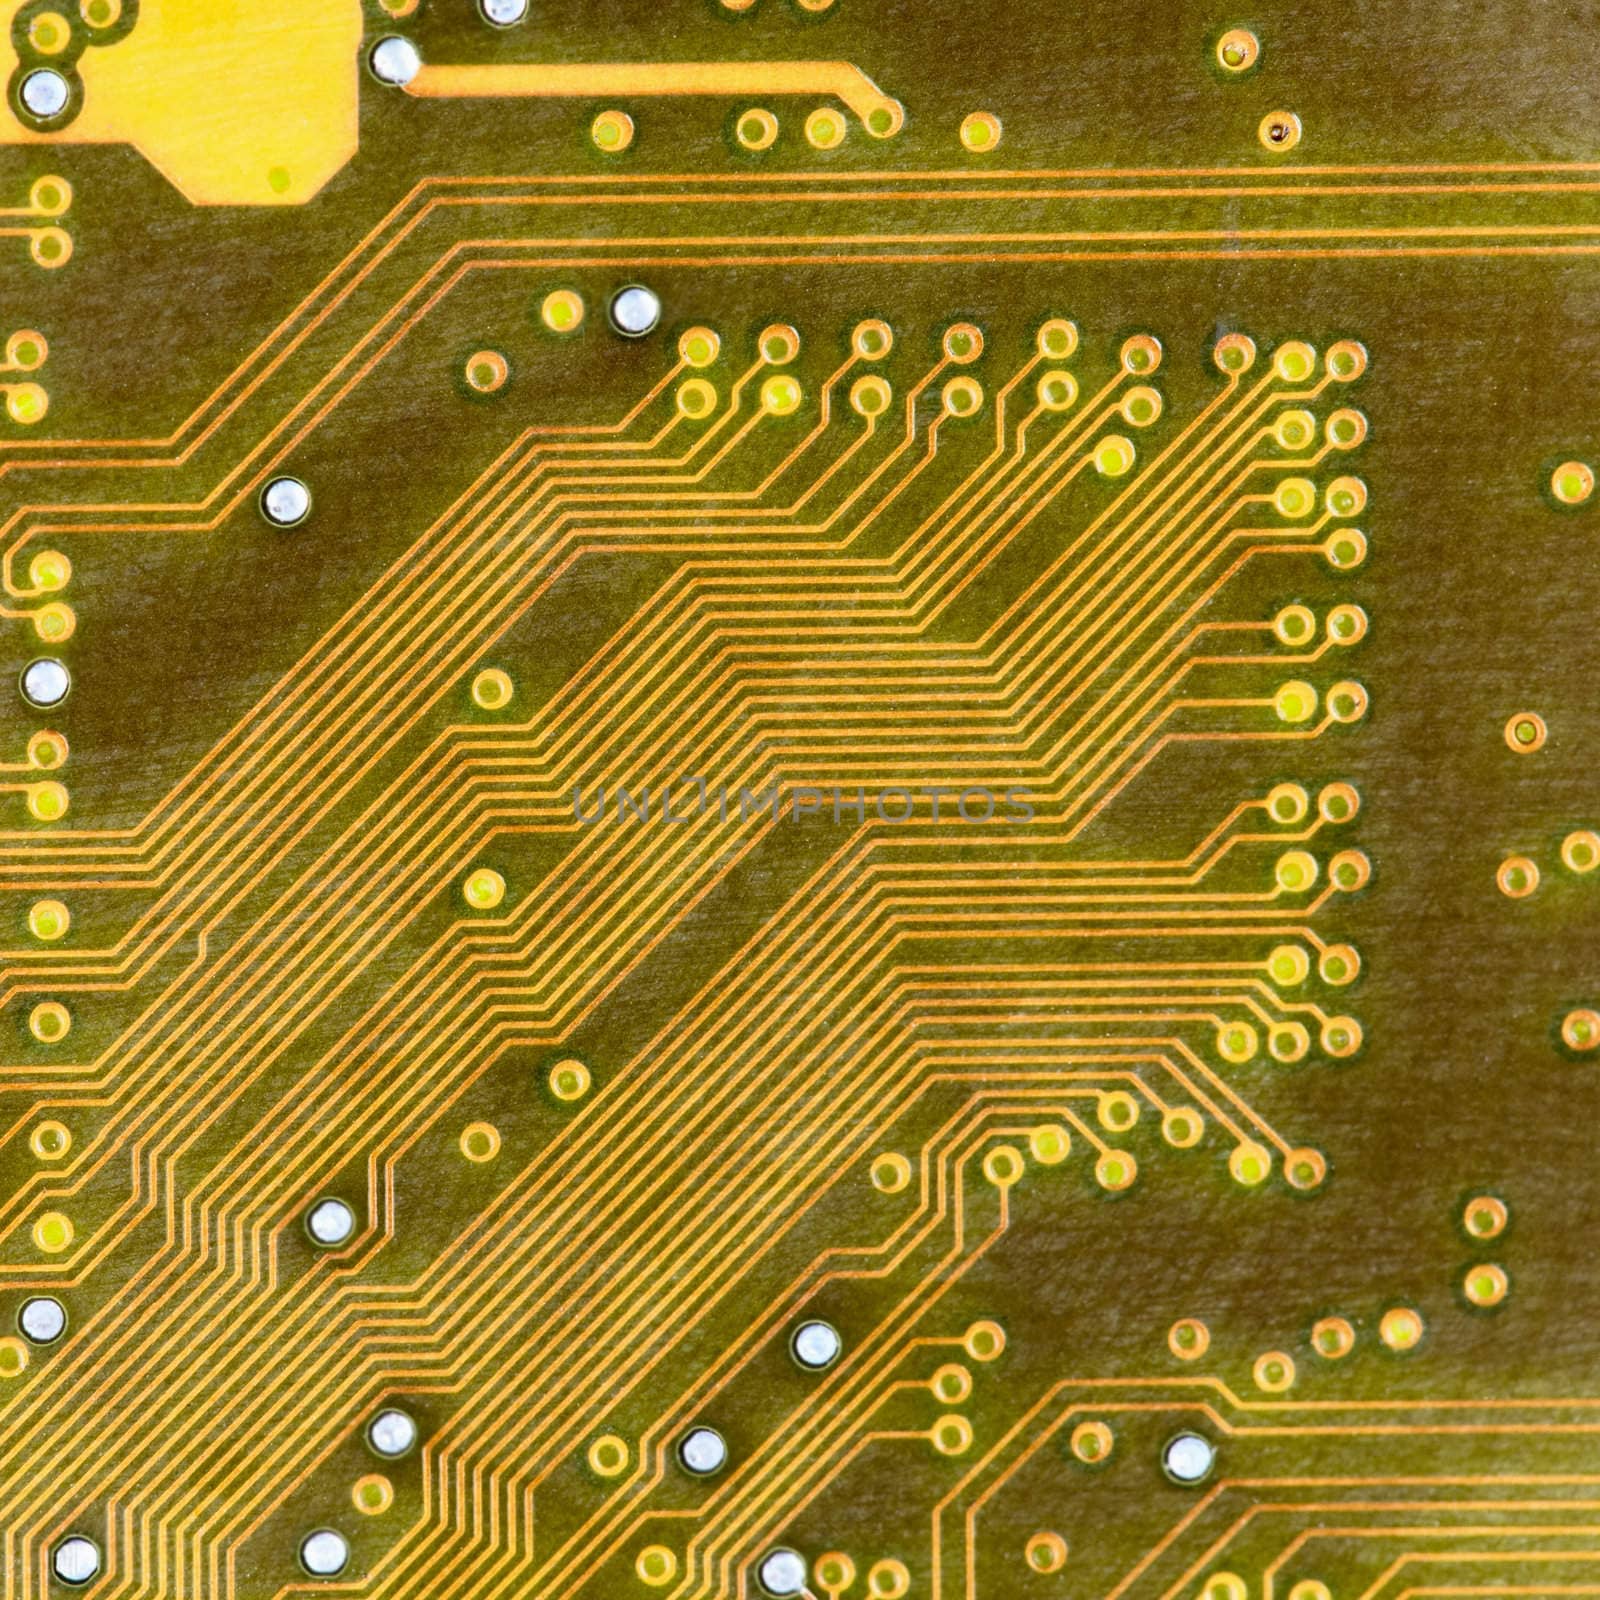 Hi-tech electronic circuit board golden texture by pzaxe